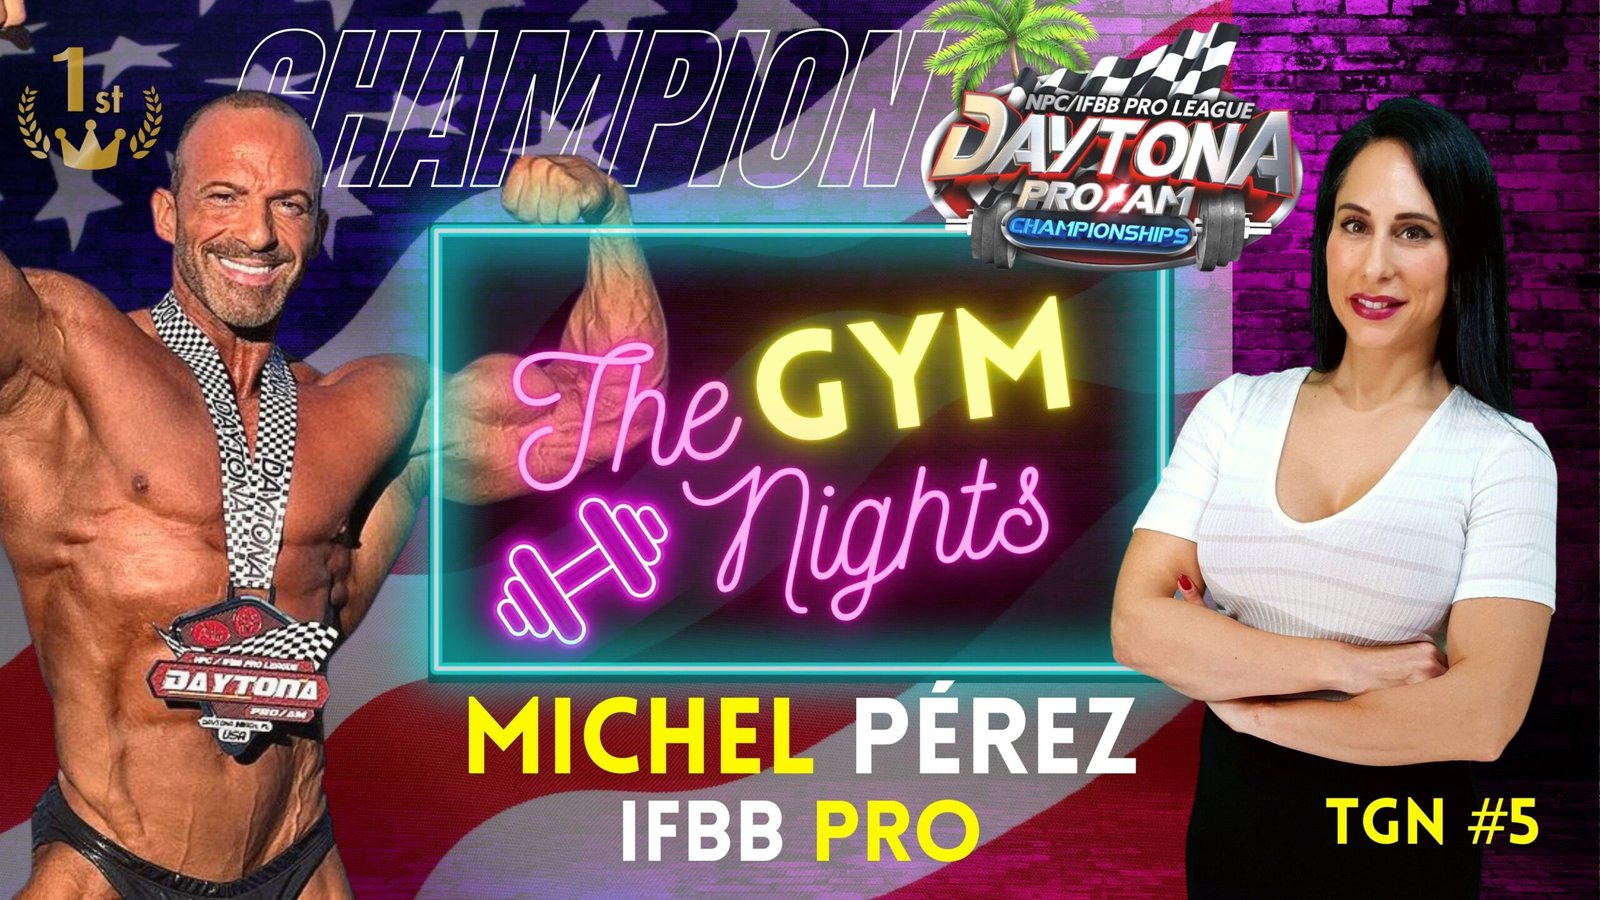 Michel-Perez-IFBB-PRO-Campeon-Daytona-NPC-PORTADA-Video